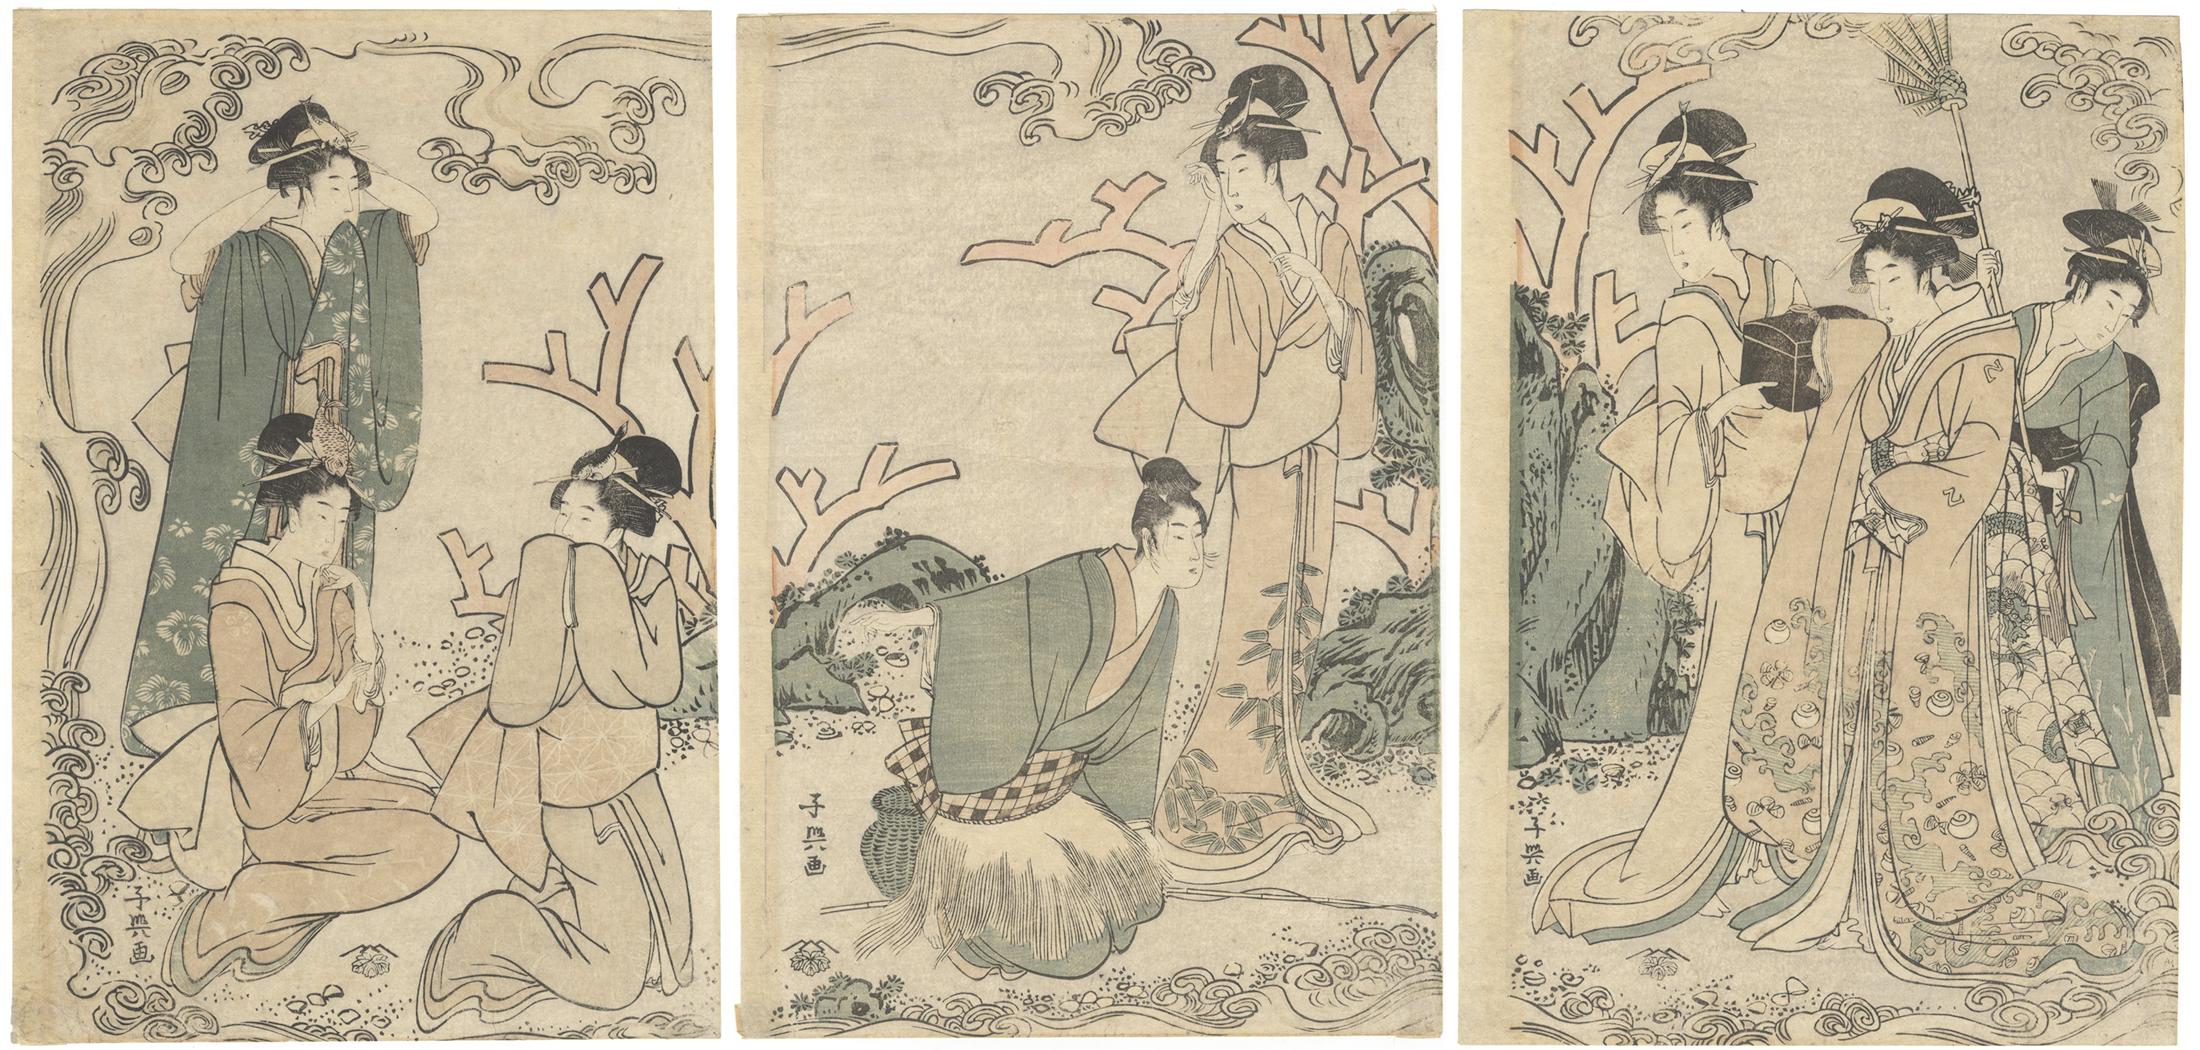 Eishosai Choki Figurative Print - Choki Eishosai, Parody, Kimono, Courtesan, Japanese Woodblock Print, Edo Period